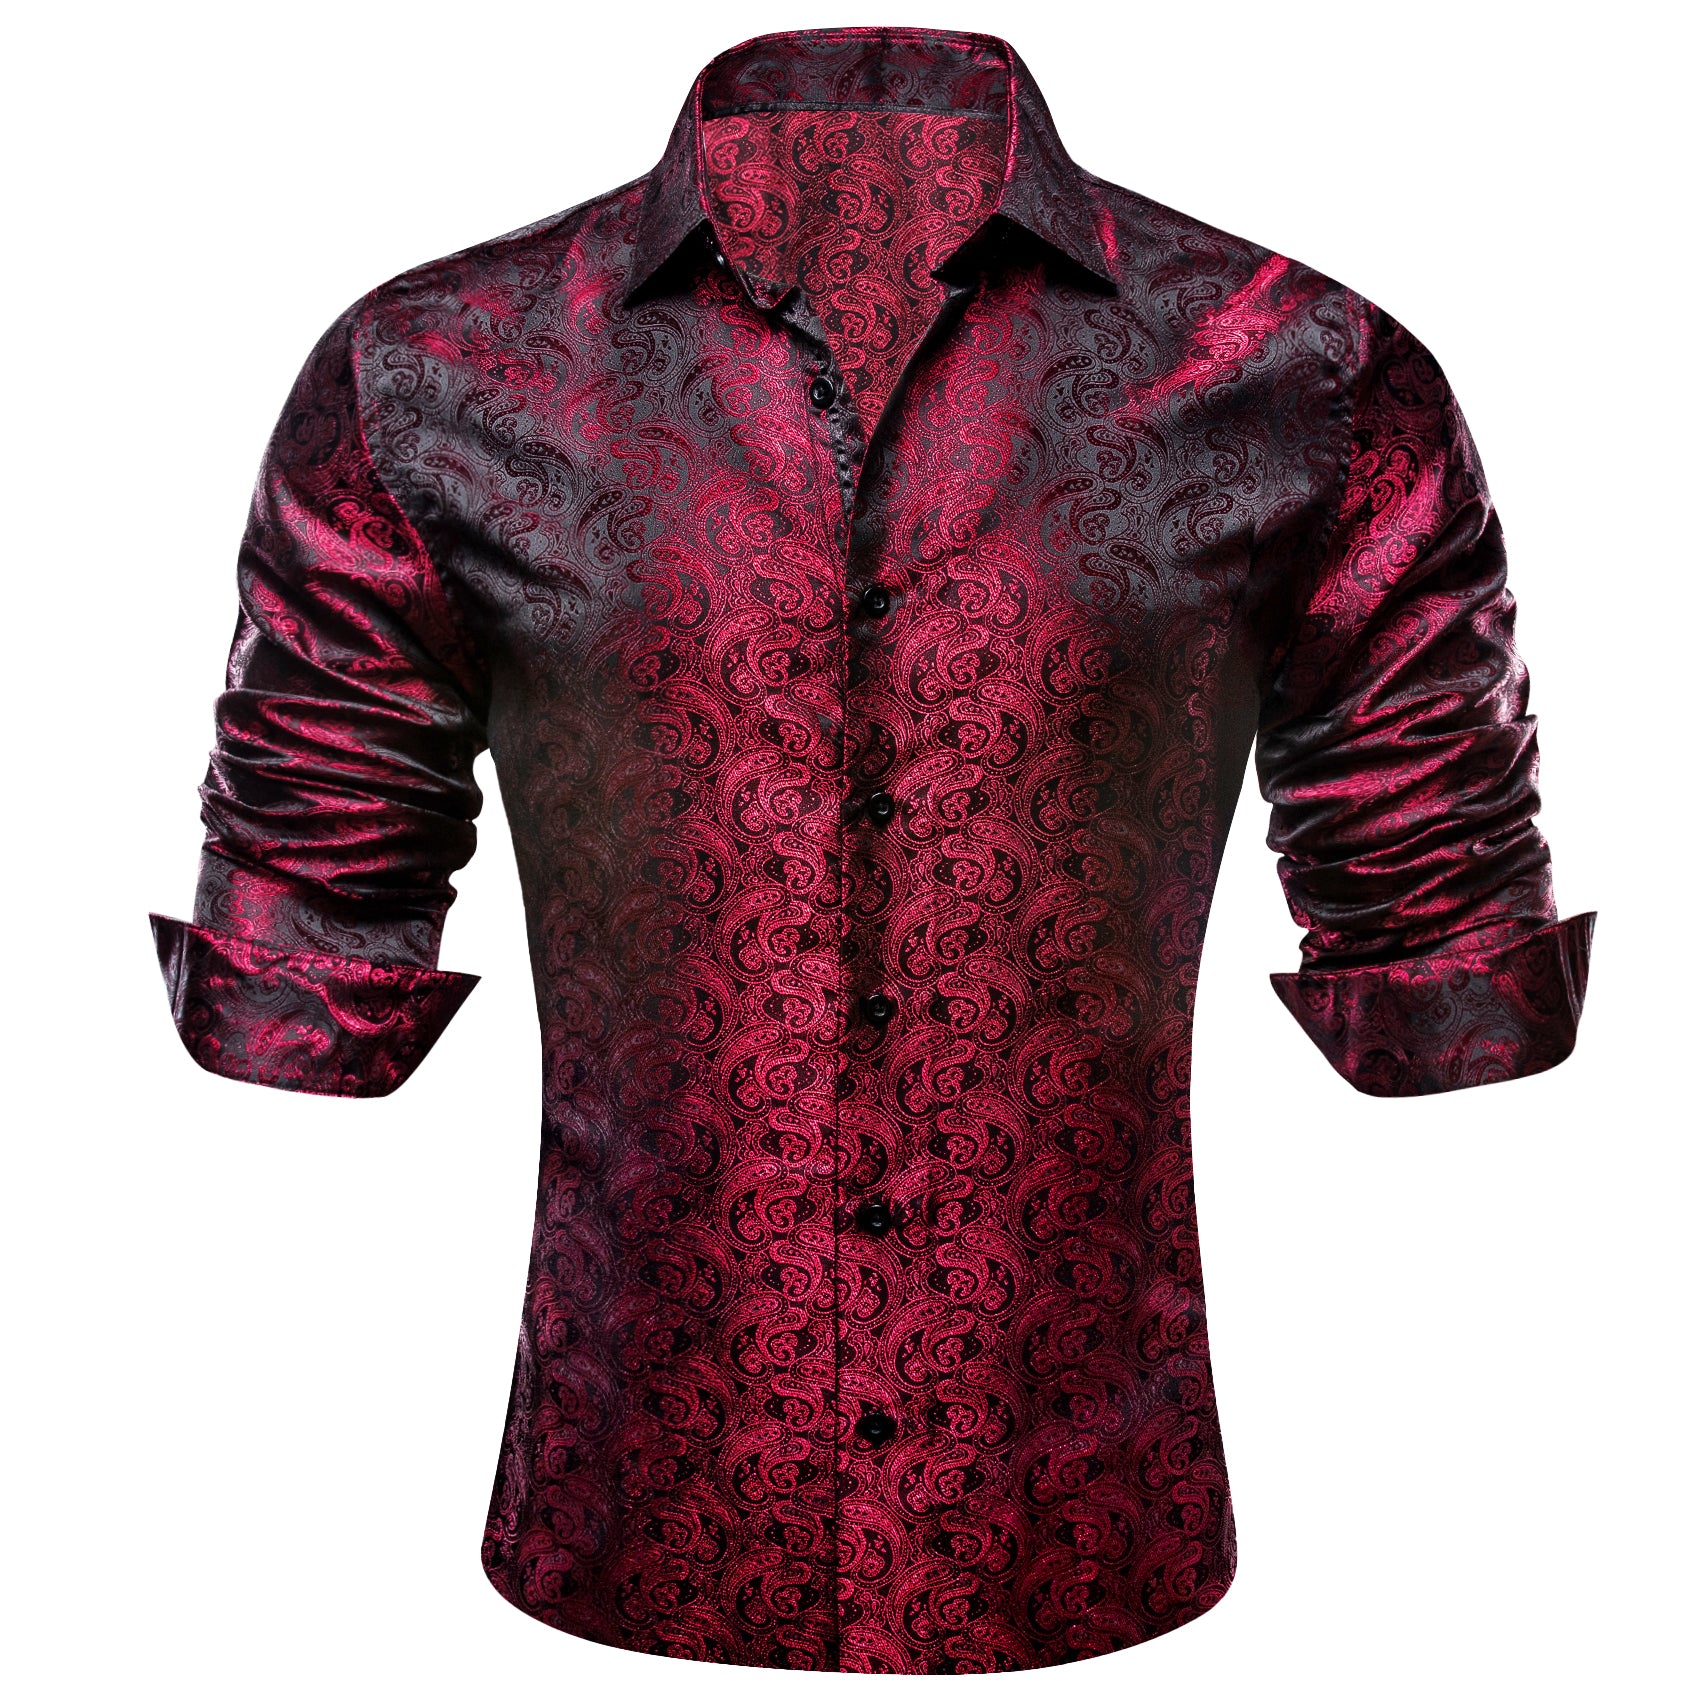 Barry.wang Luxury Purplish Red Paisley Silk Shirt